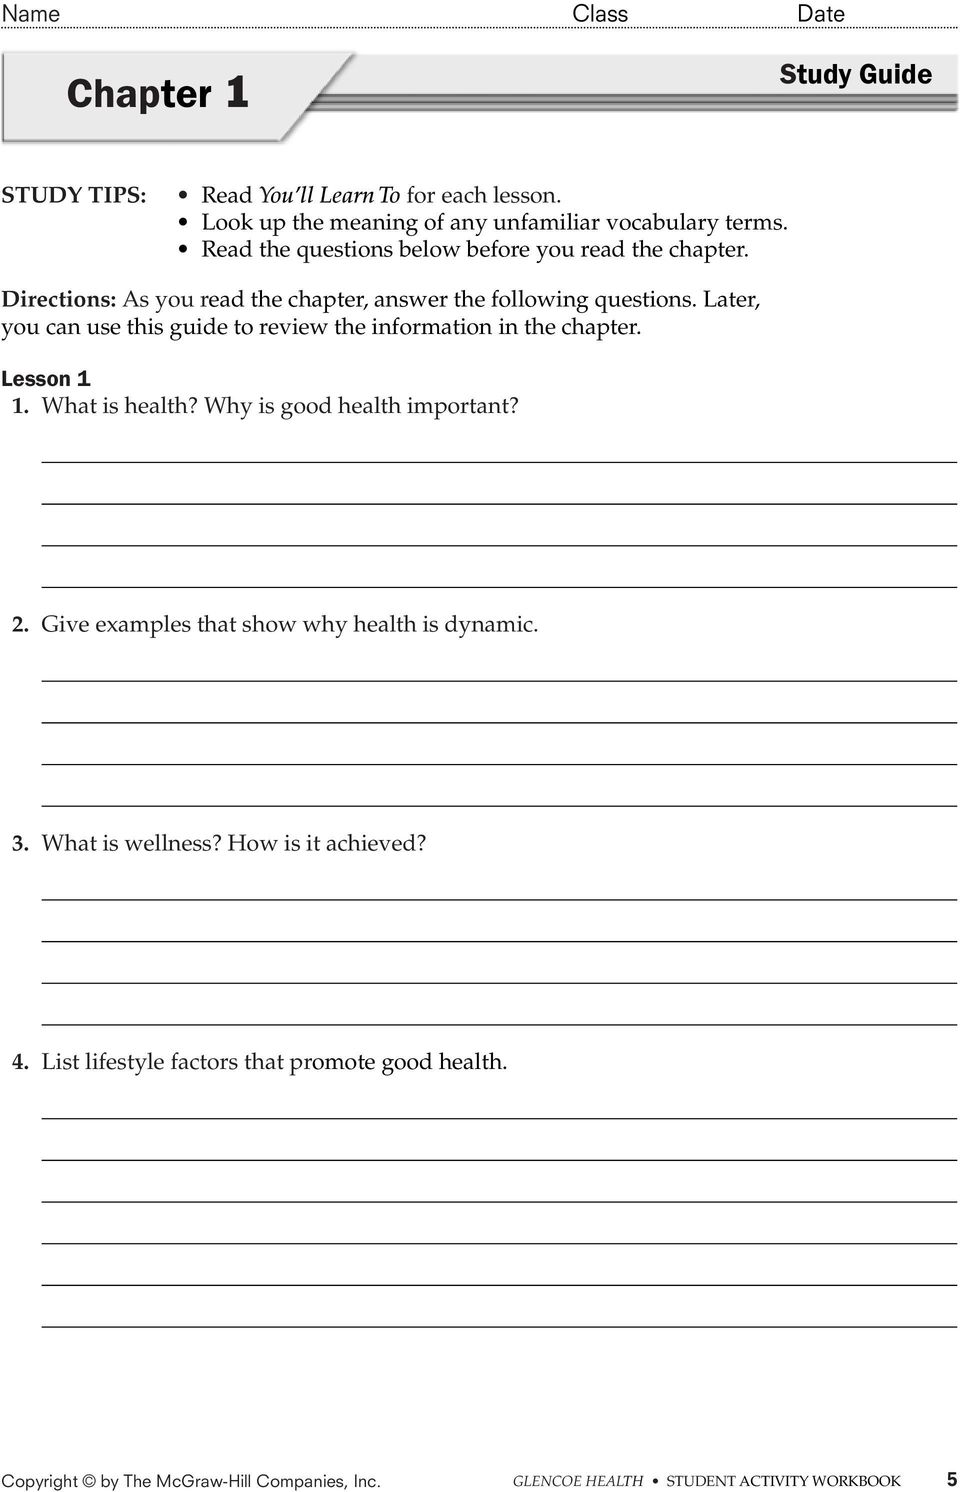 glencoe health student activity workbook pdf